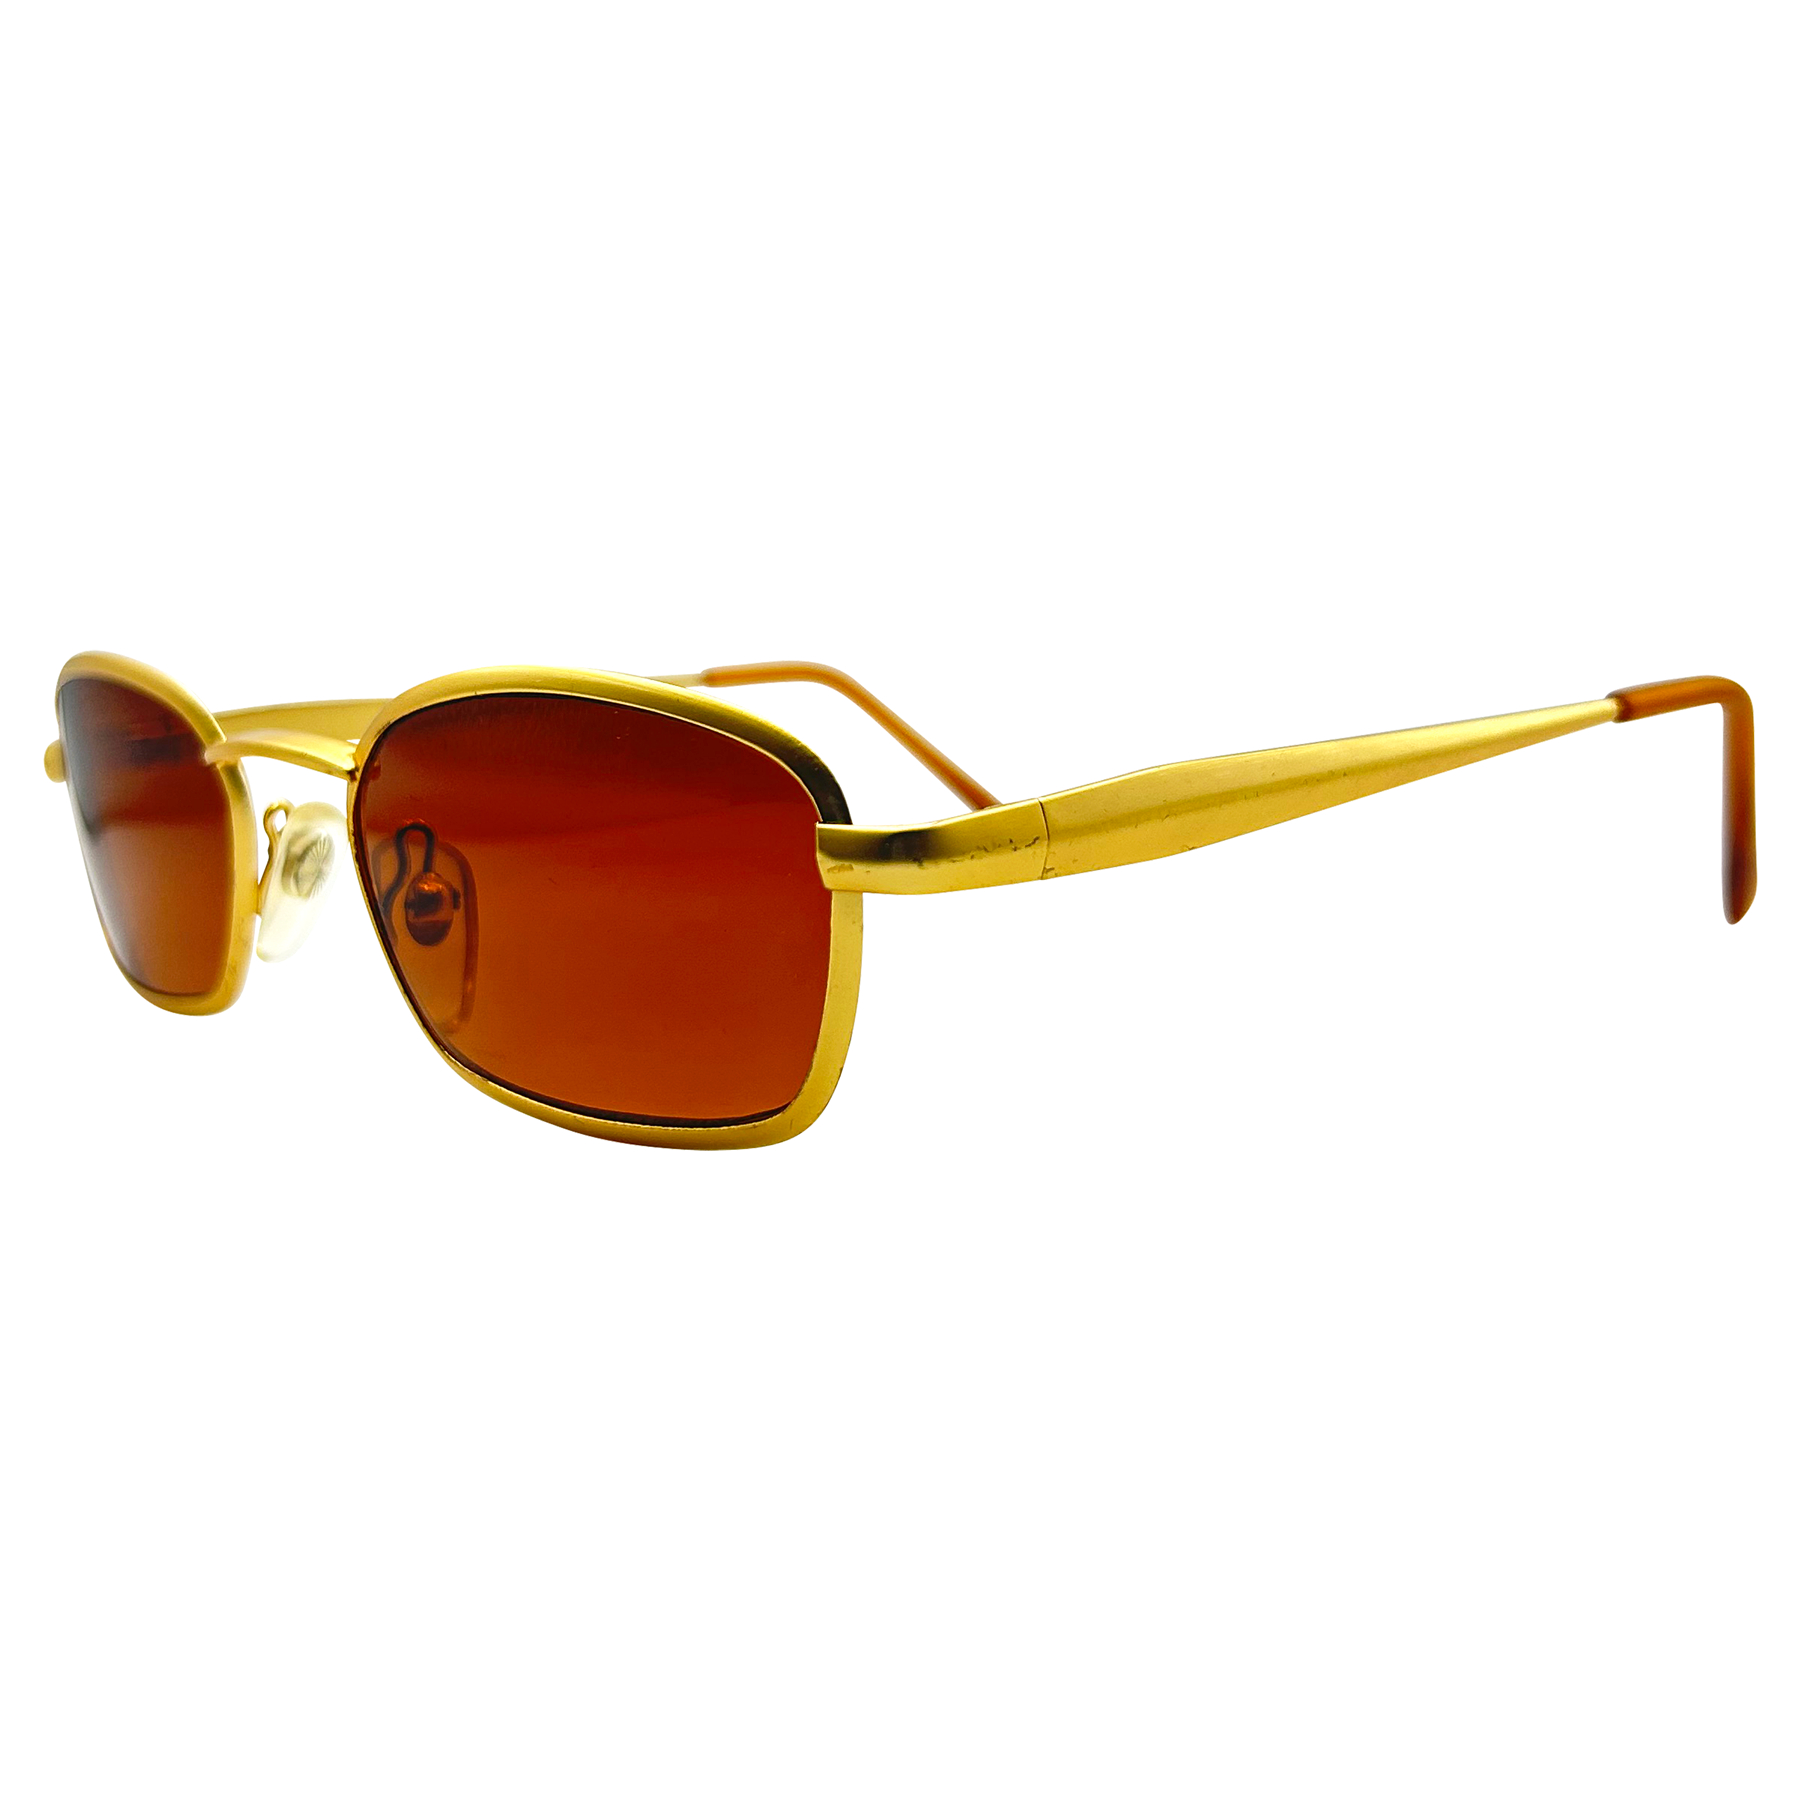 LEFT LANE Square 90s Sunglasses | Blueblockers | Day Driving